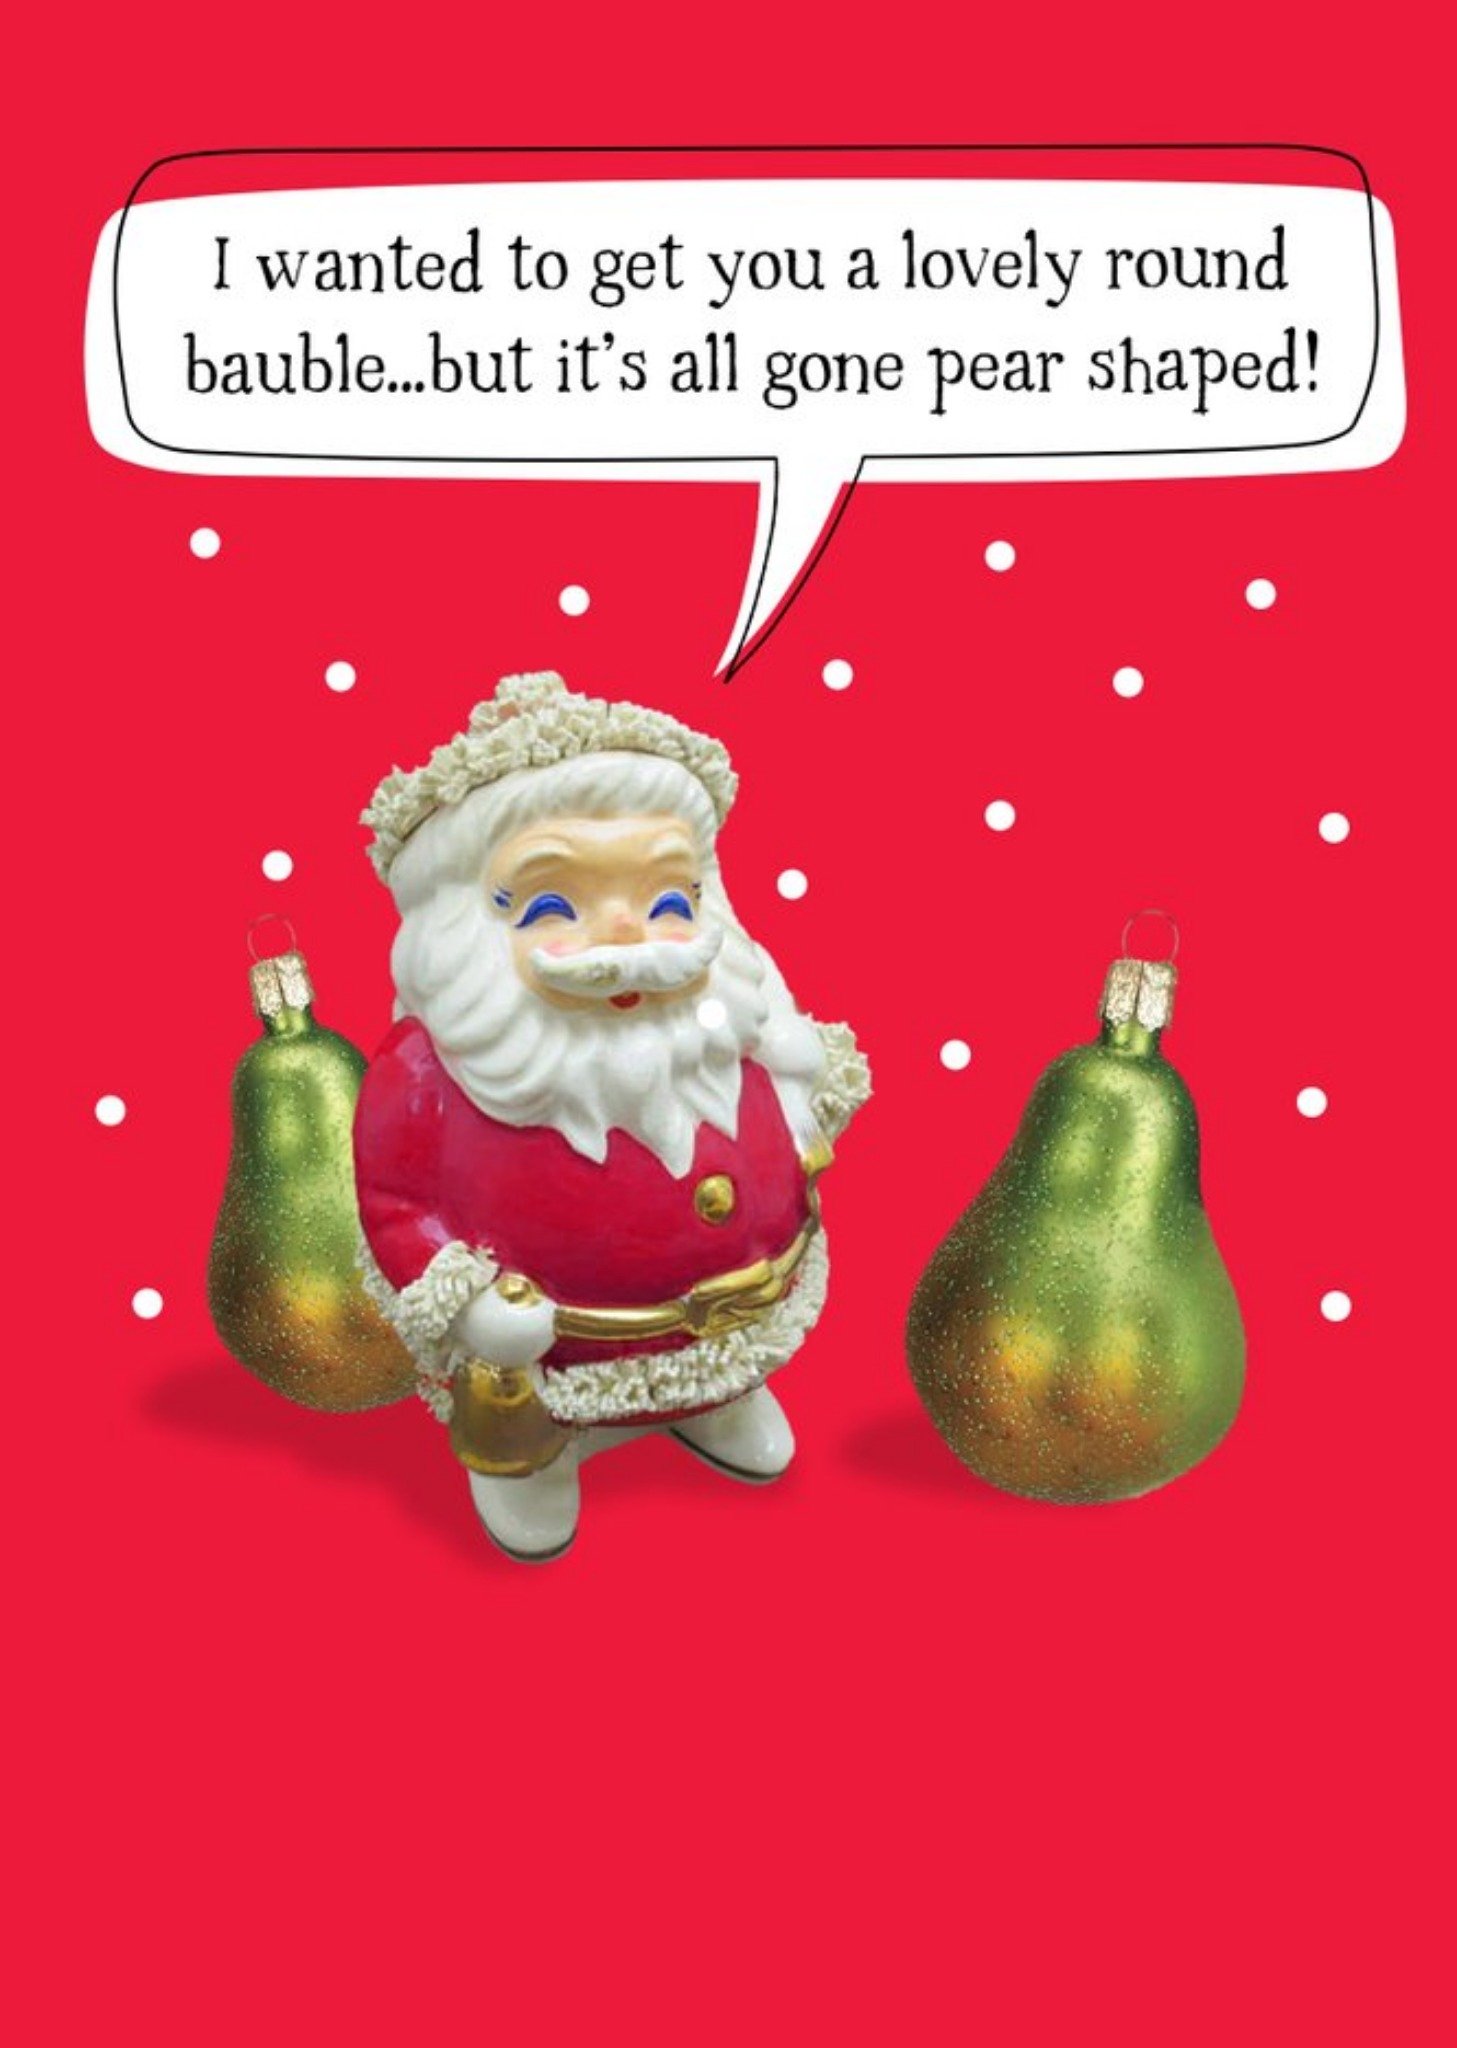 Moonpig Pear Shaped Baulble Funny Christmas Card, Large